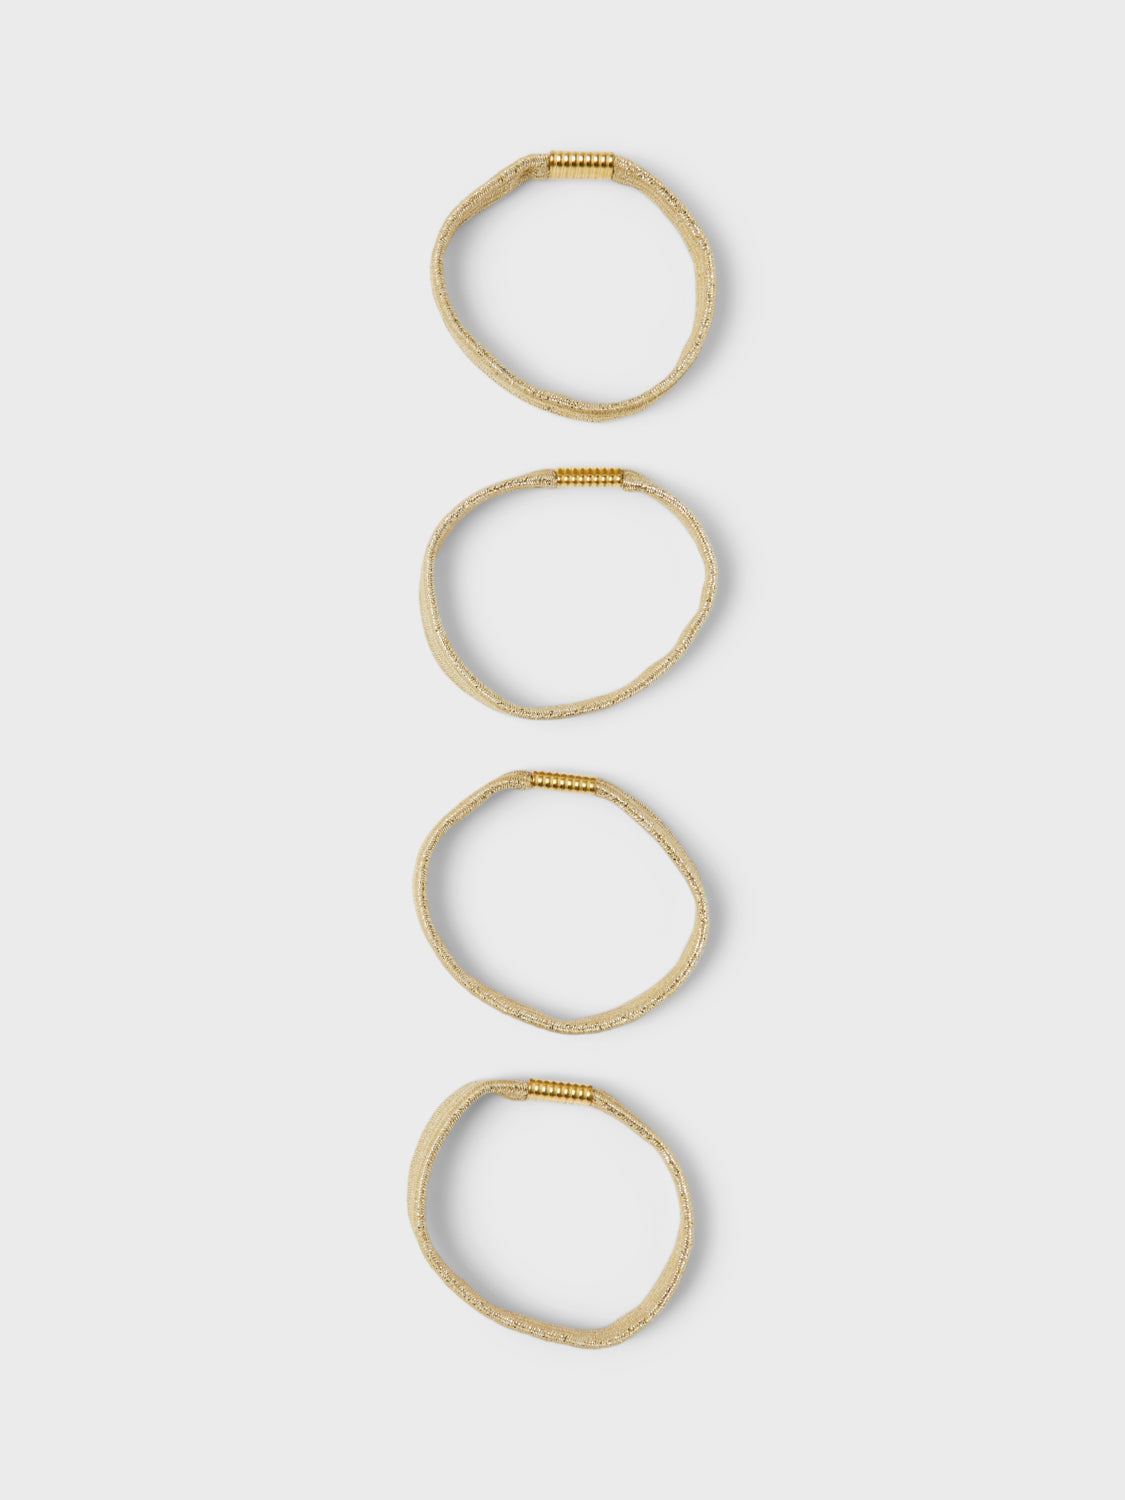 NKFACC-RUBI Accessories - Gold Colour